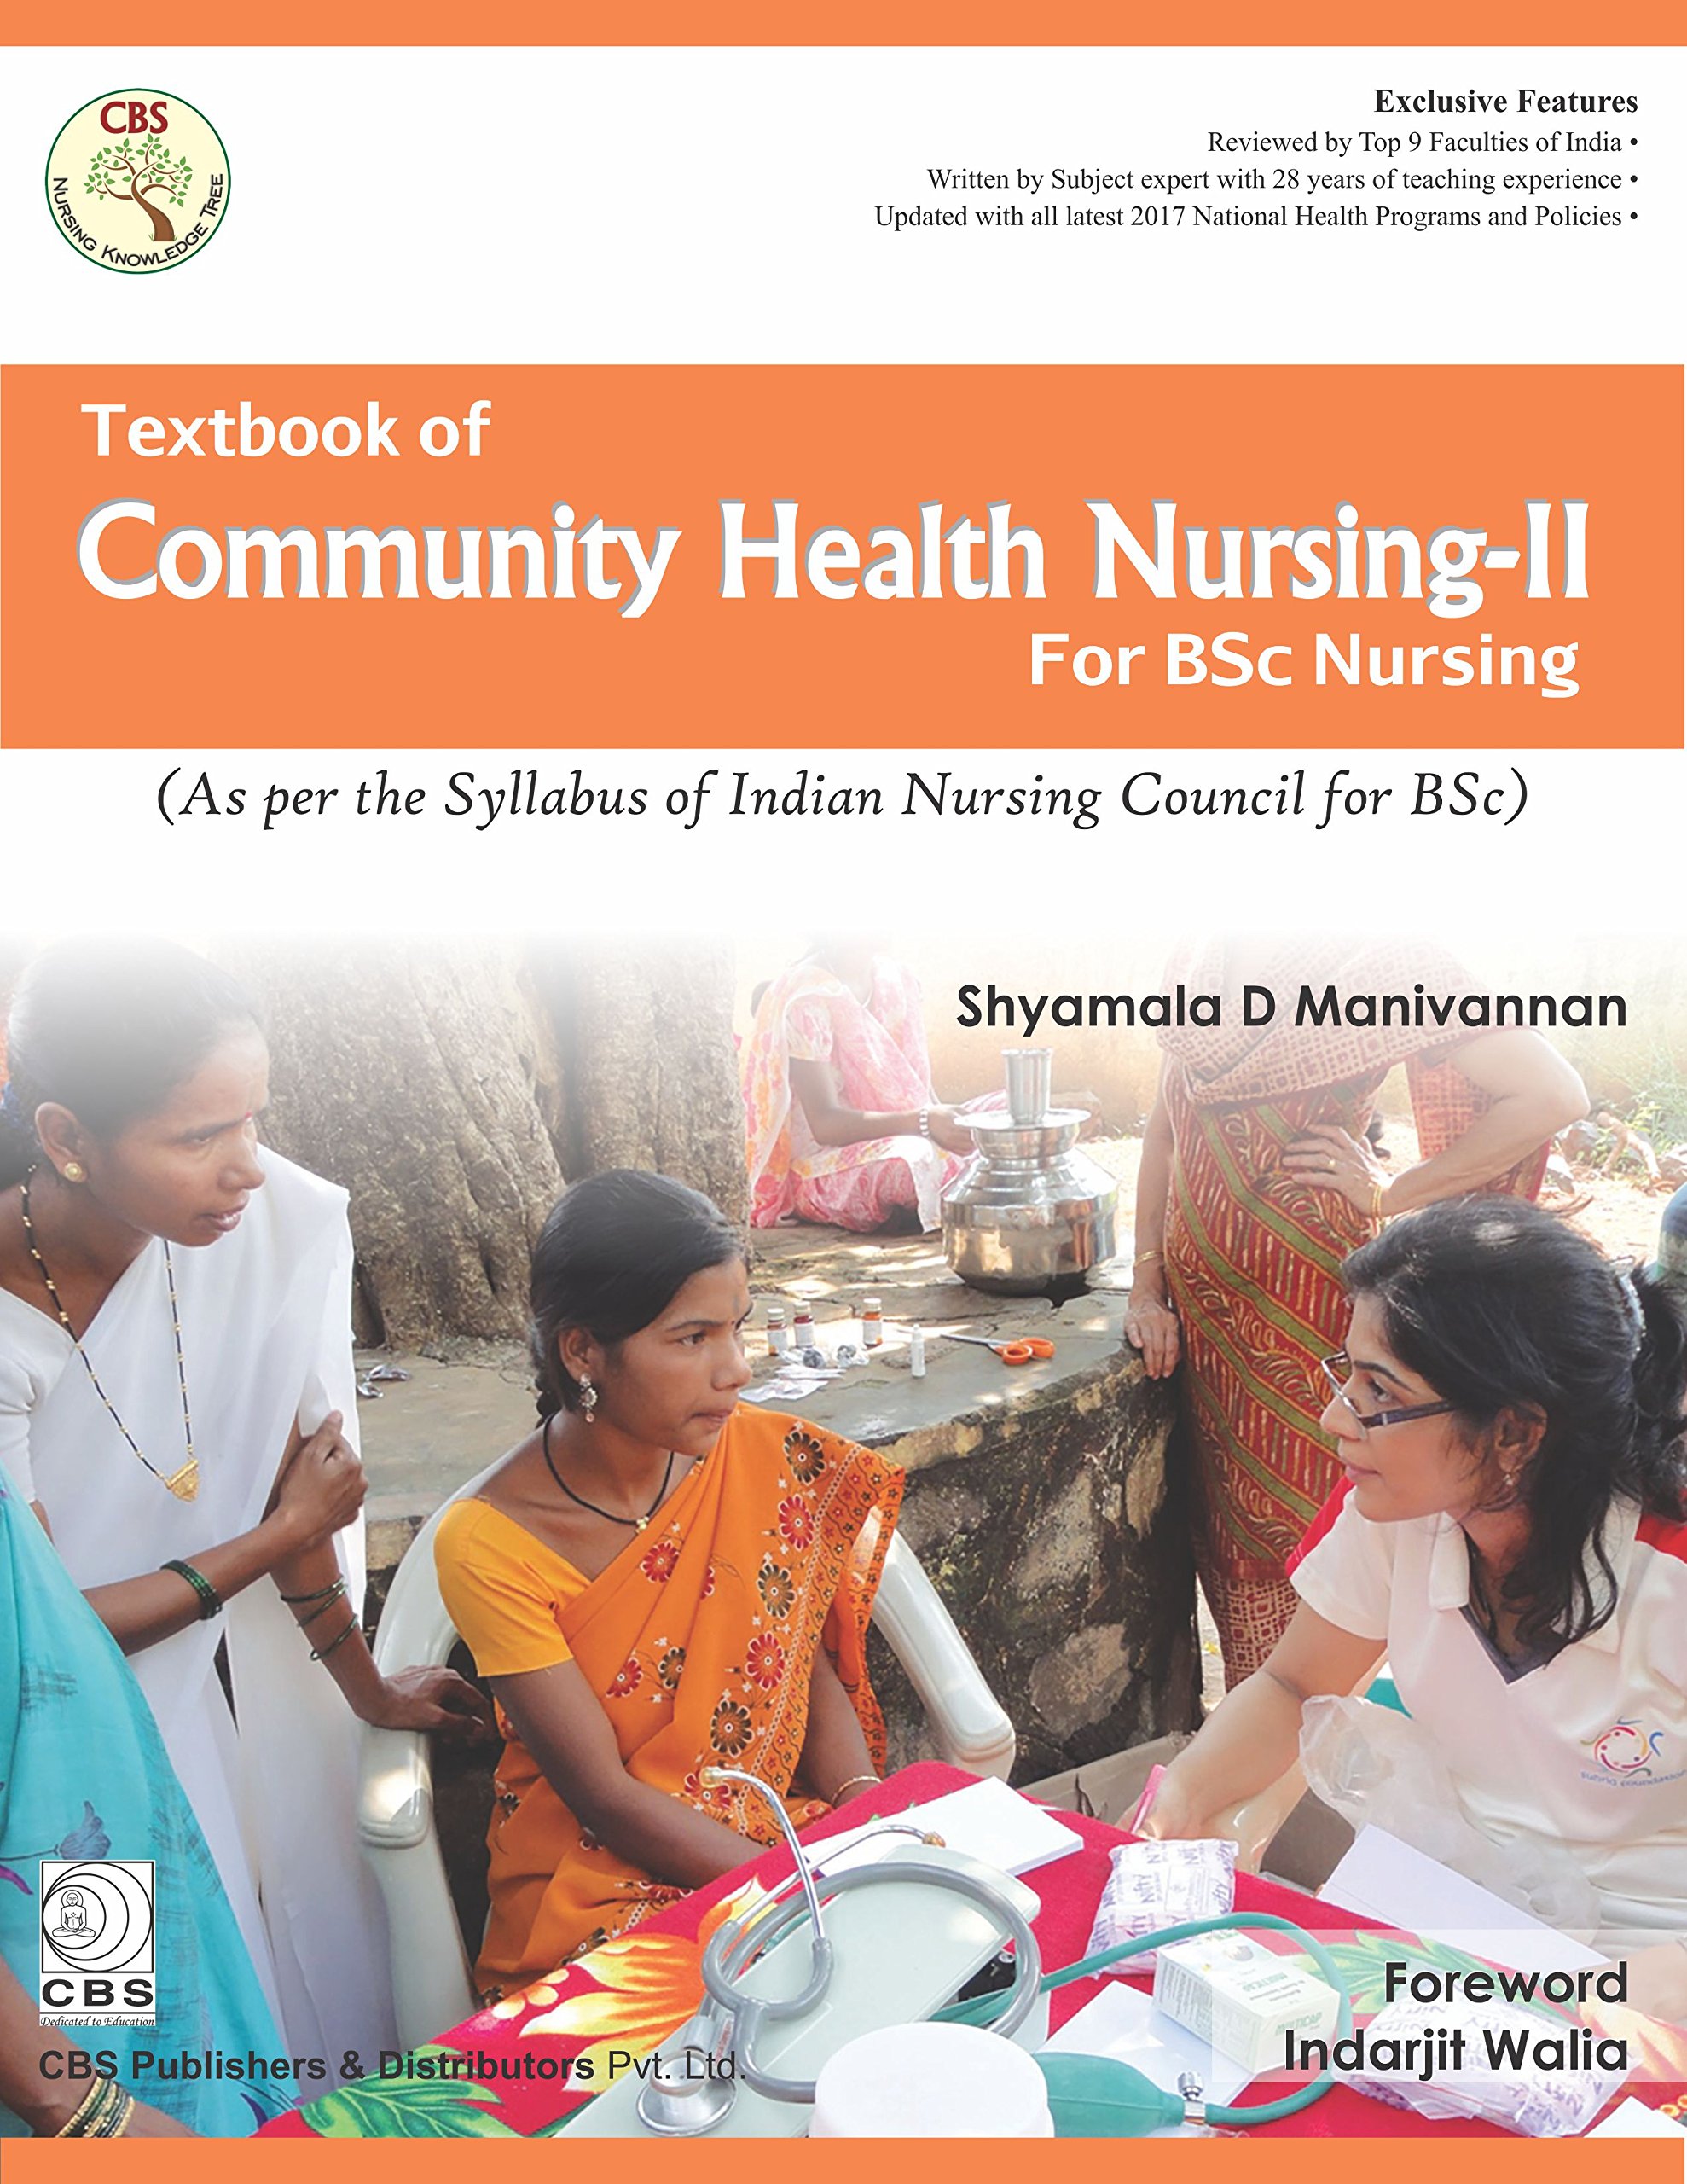 case study for community health nursing